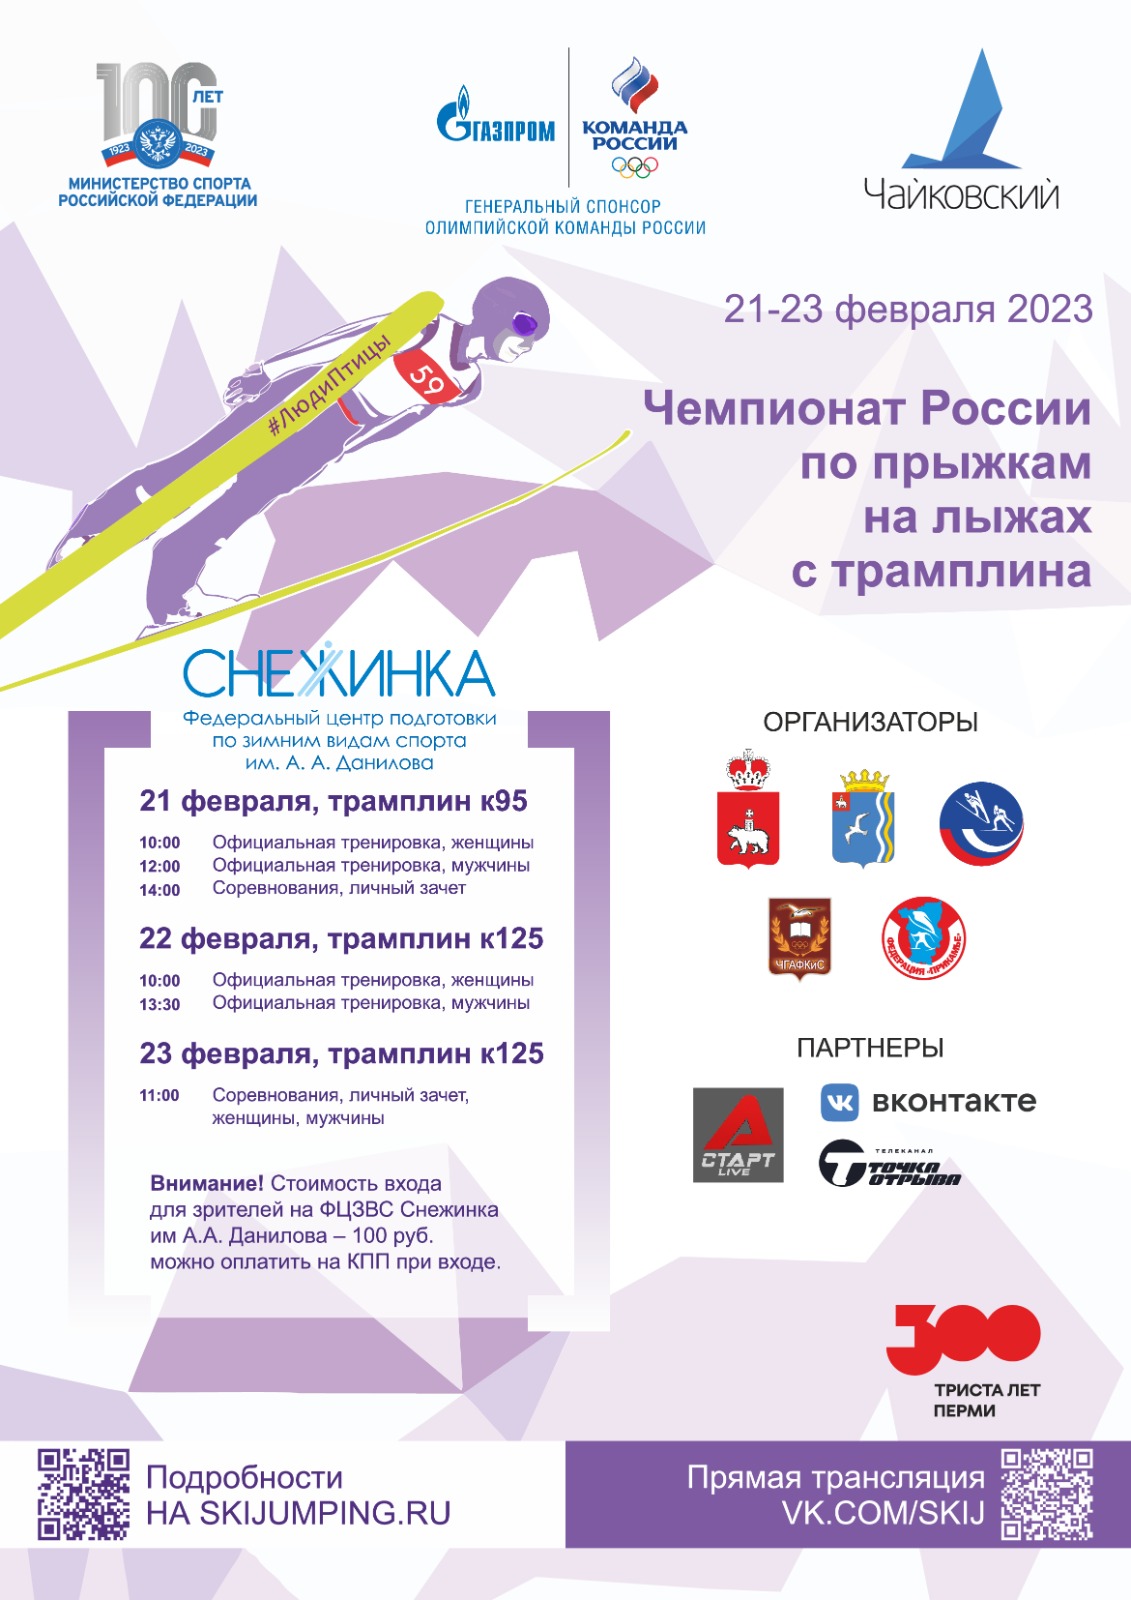 Программа Чемпионата России по прыжкам с трамплина